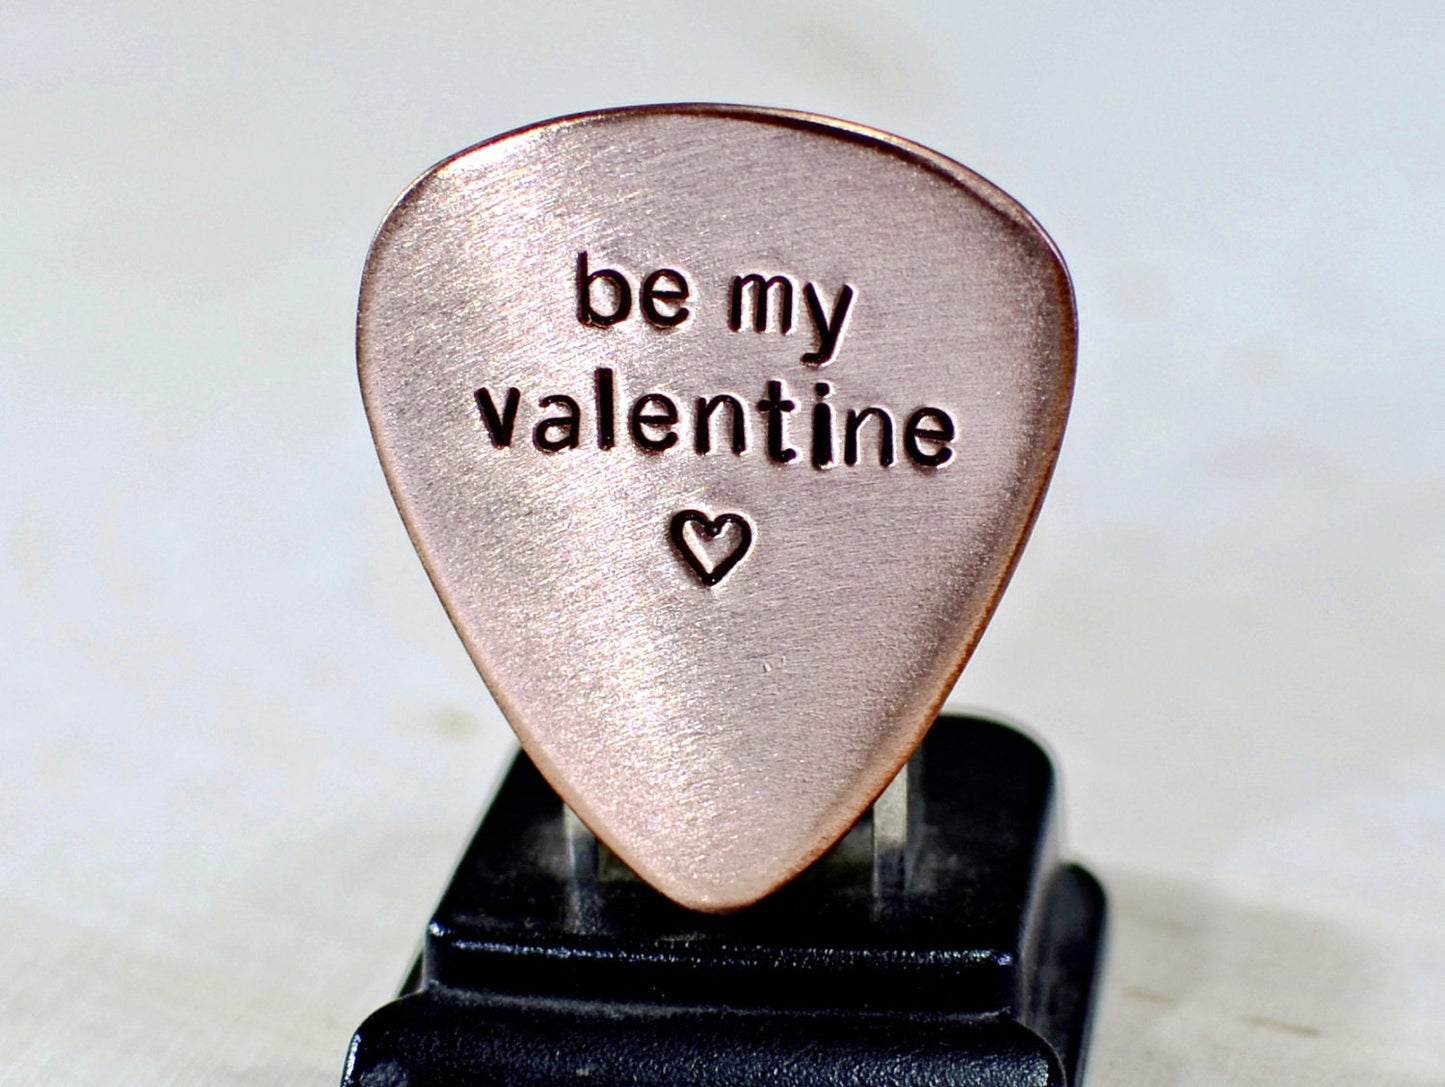 Be my Valentine Guitar Pick in various metals